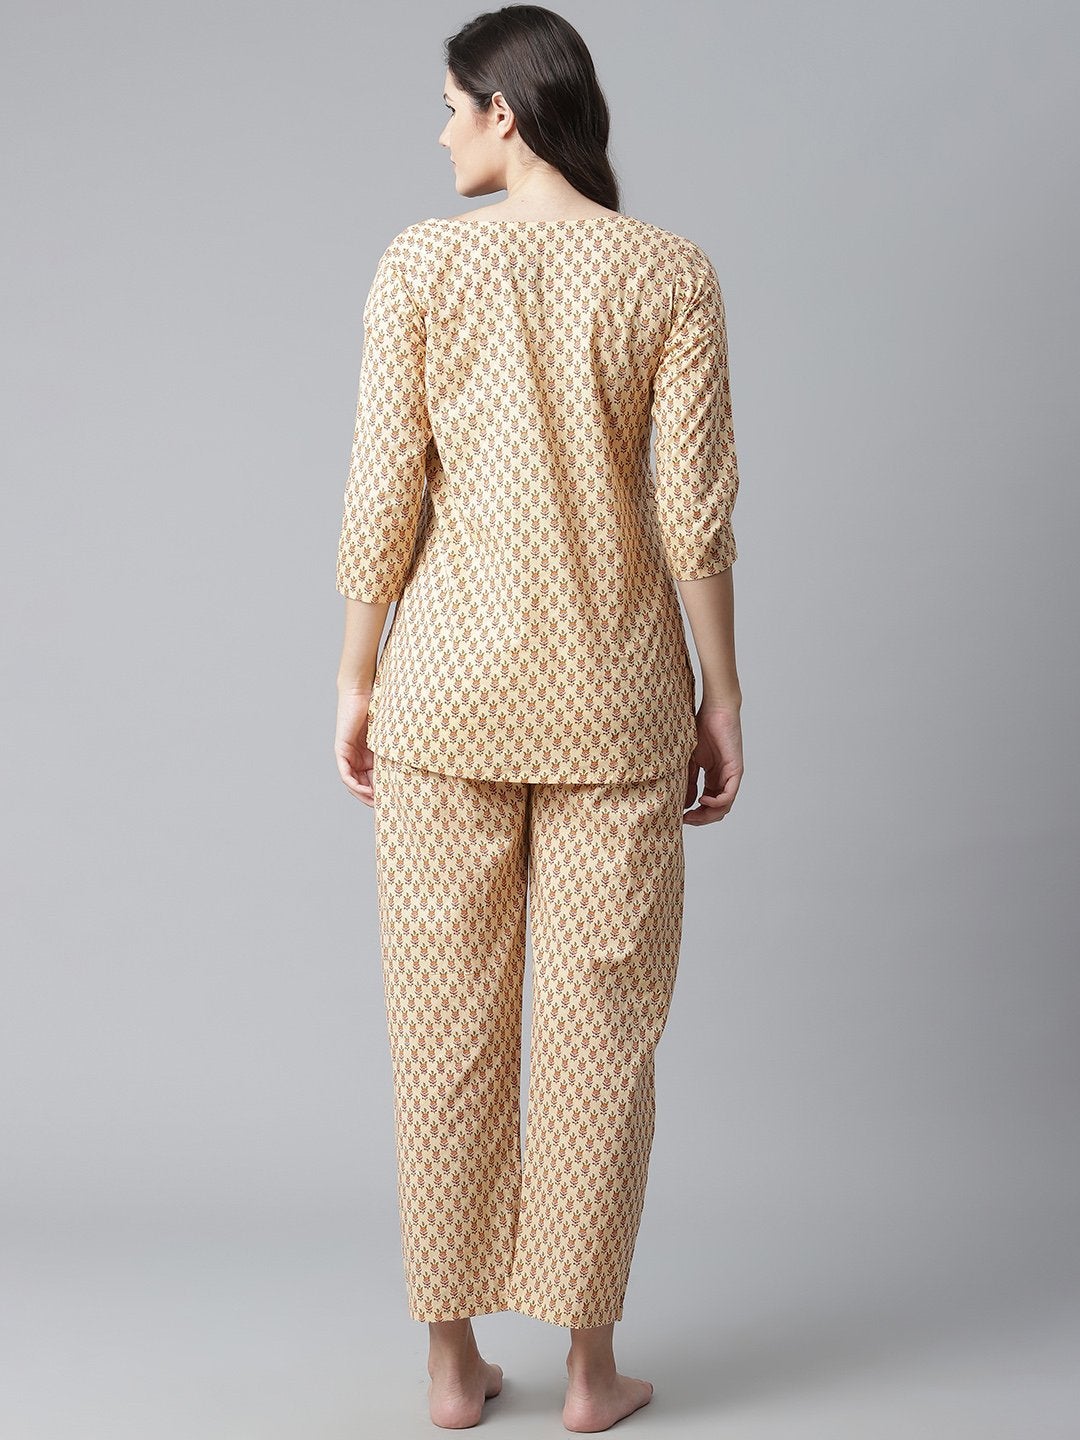 Women's The Dressify Yellow Buti Print Cotton Nightwear - Divena